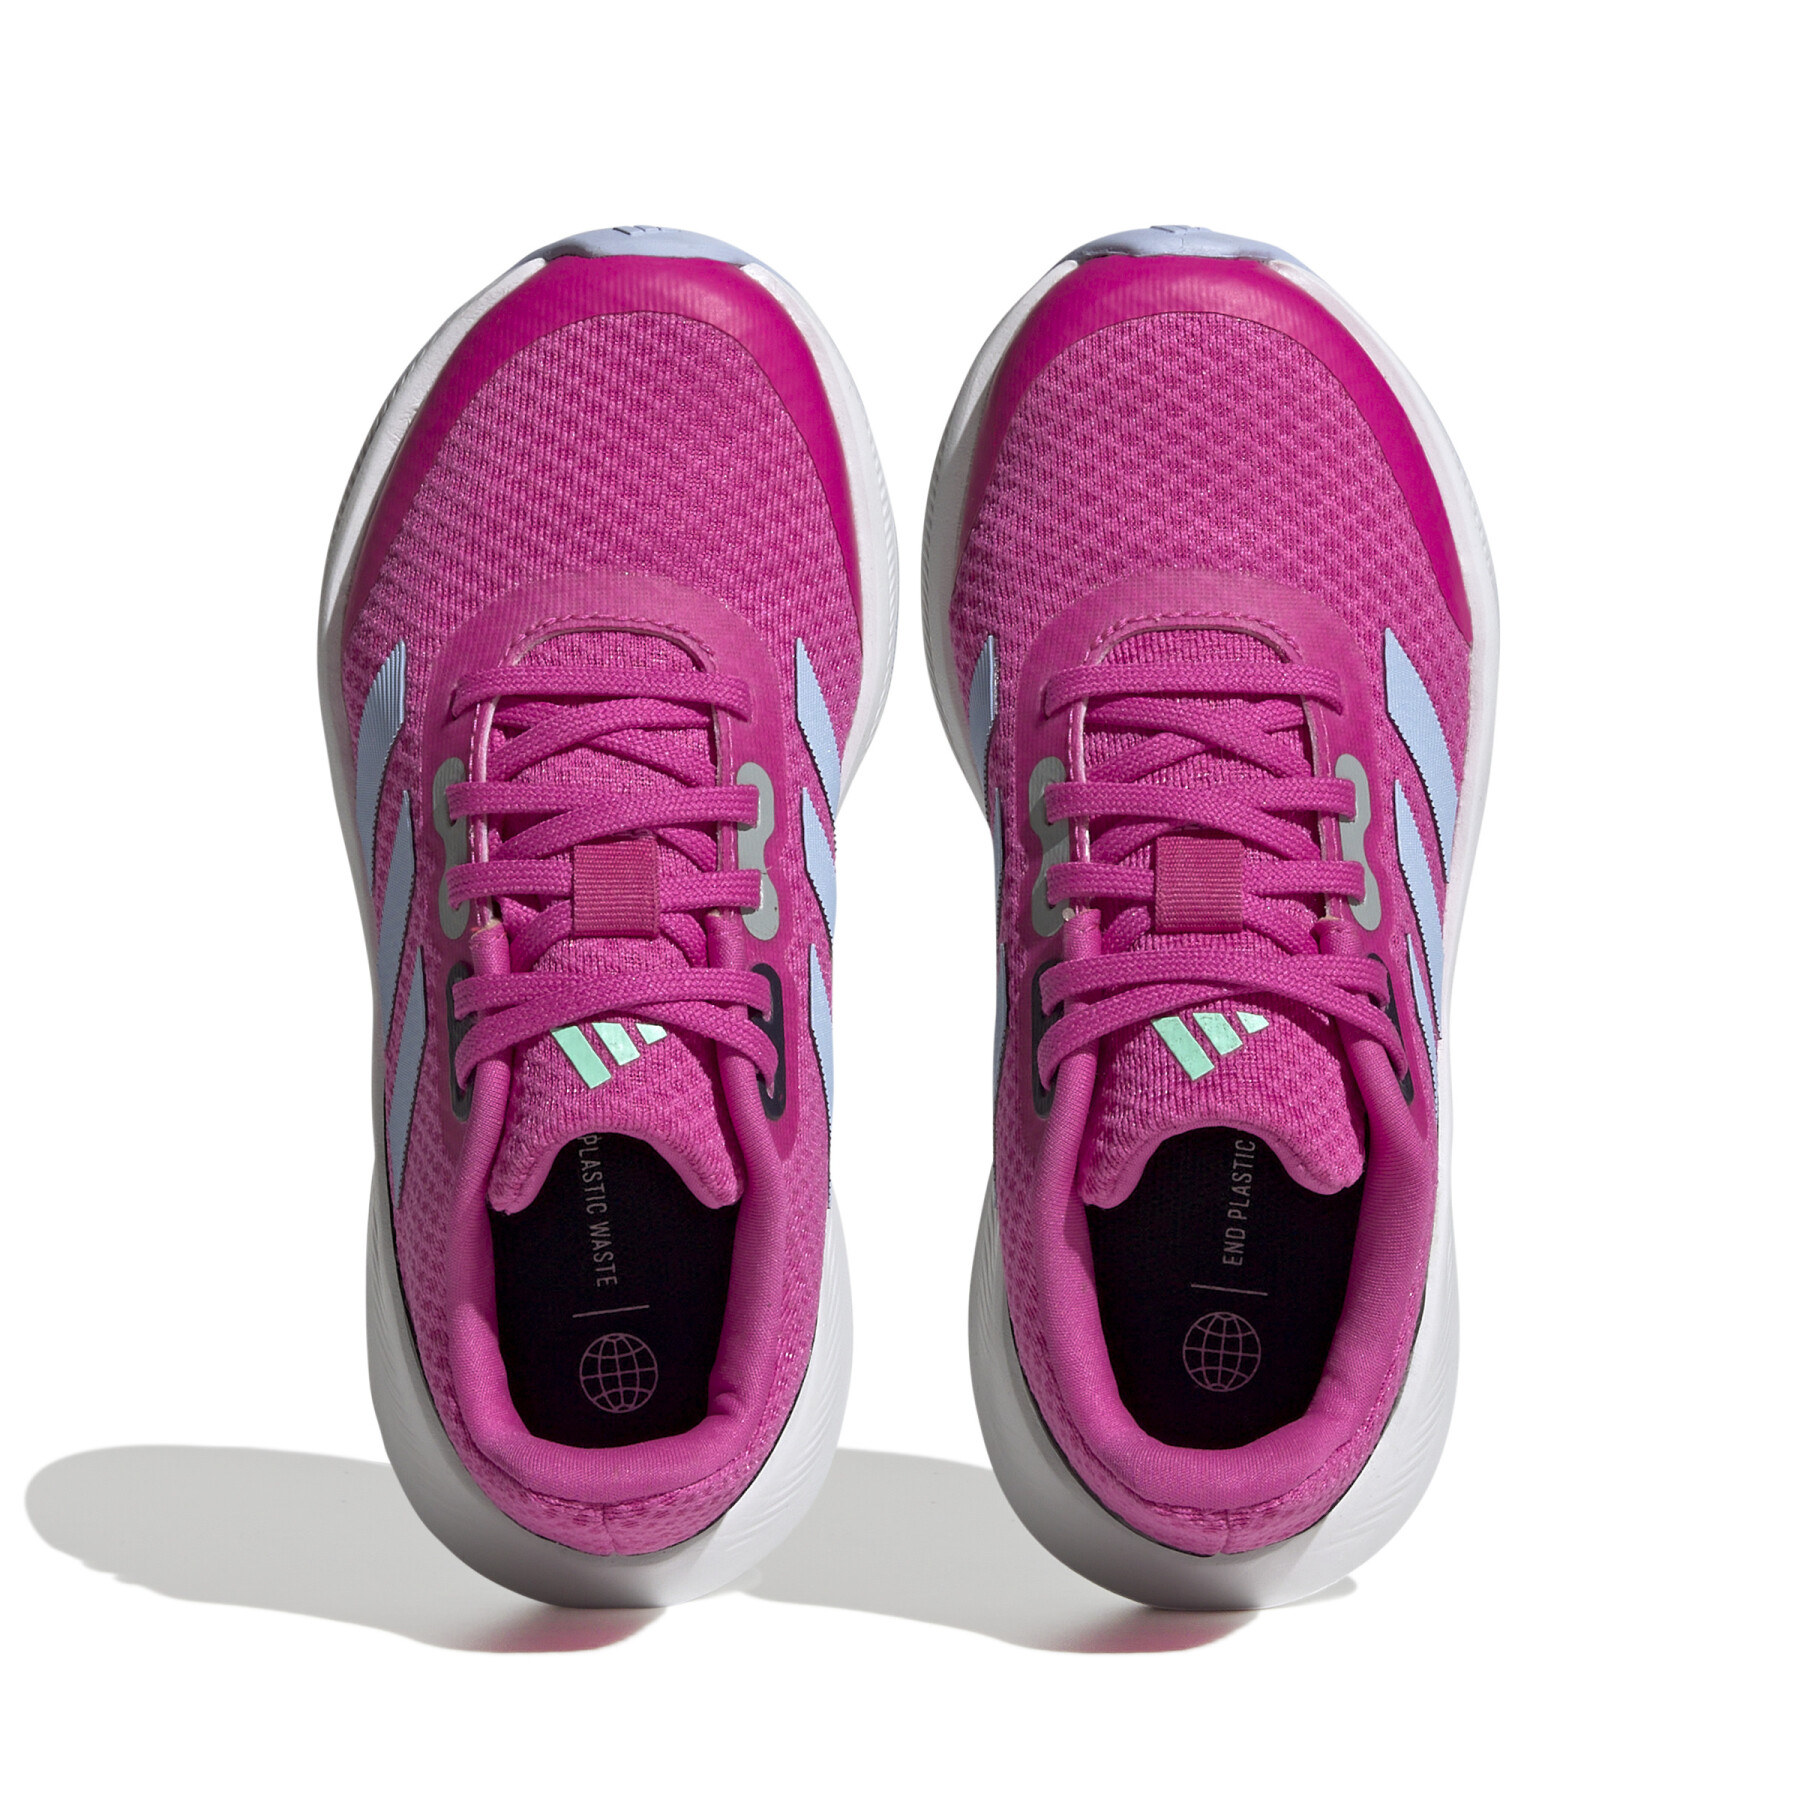  running buty dziewczęce adidas RunFalcon 3